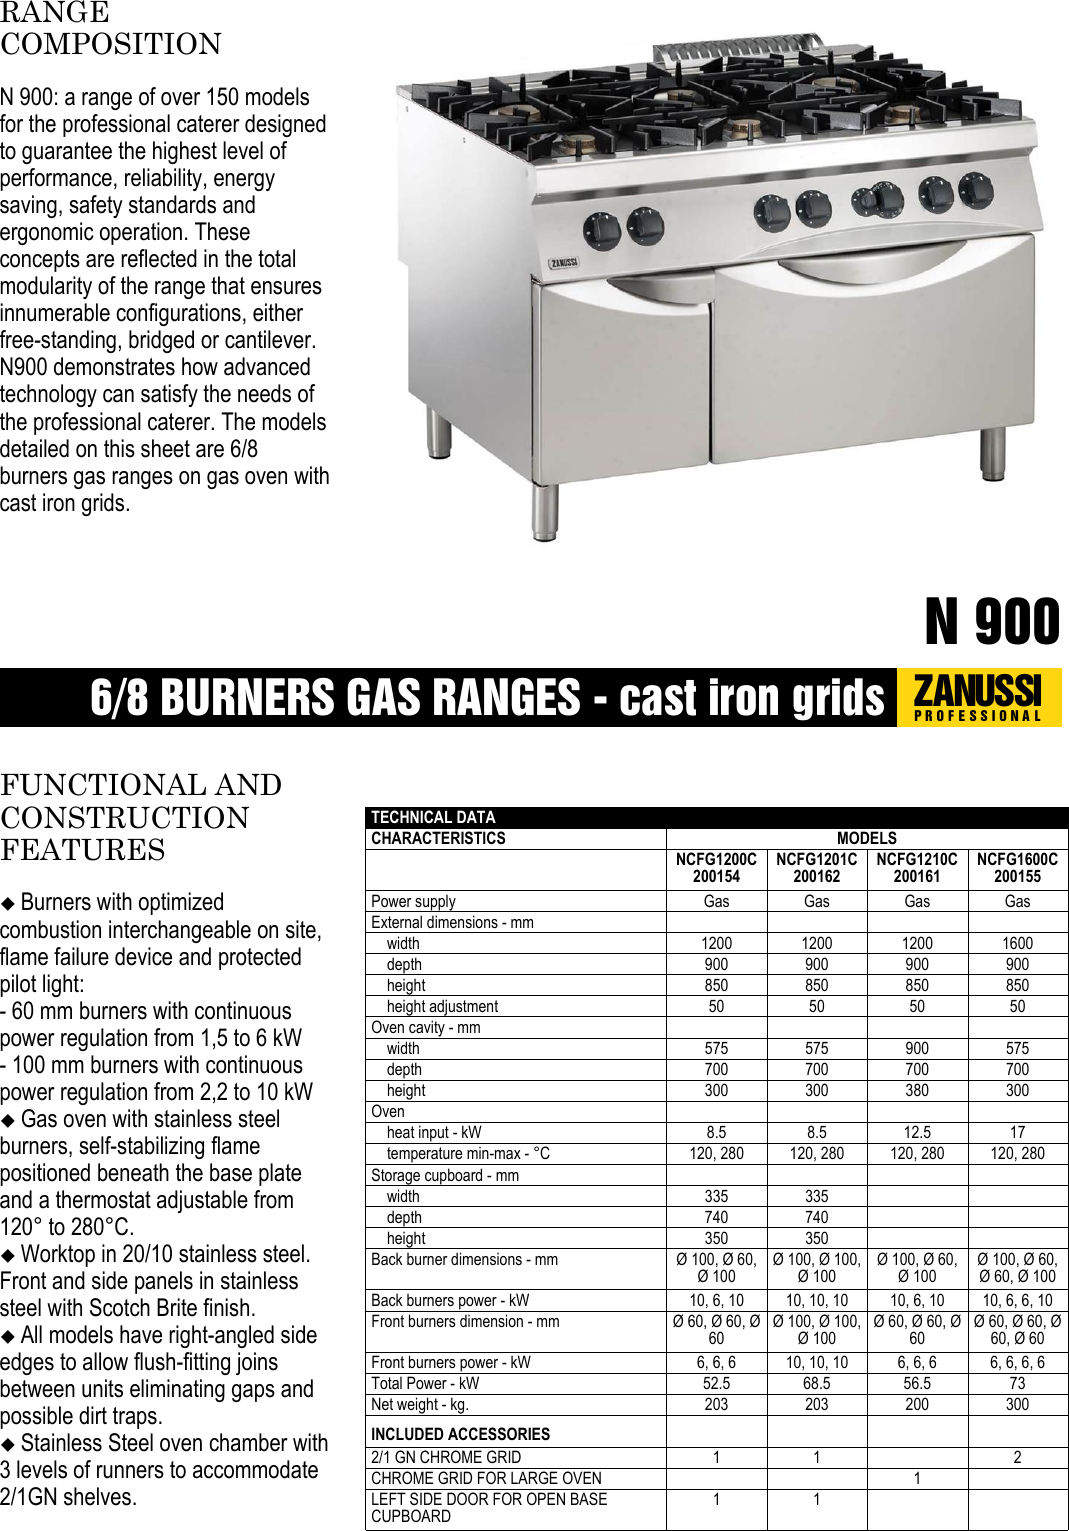 Page 1 of 3 - Zanussi Zanussi-200154-Brochure- 6/8 BURNERS GAS RANGES - Cast Iron Grids  Zanussi-200154-brochure